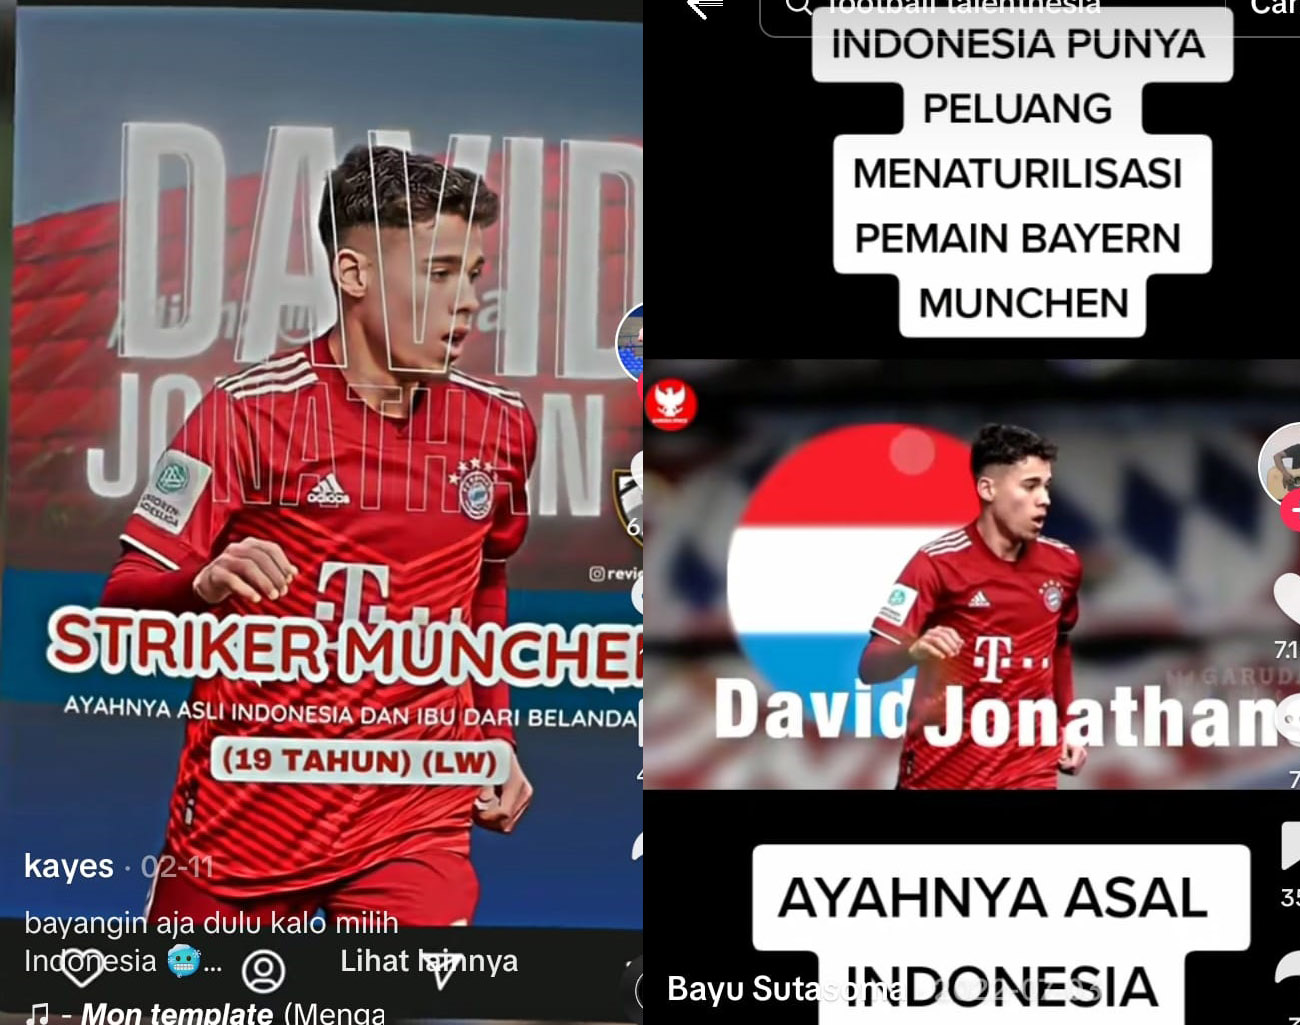 Striker Bayern Munchen ini Keturunan Indonesia Asia, Penggemar Sepak Bola Minta PSSI Naturalisasi